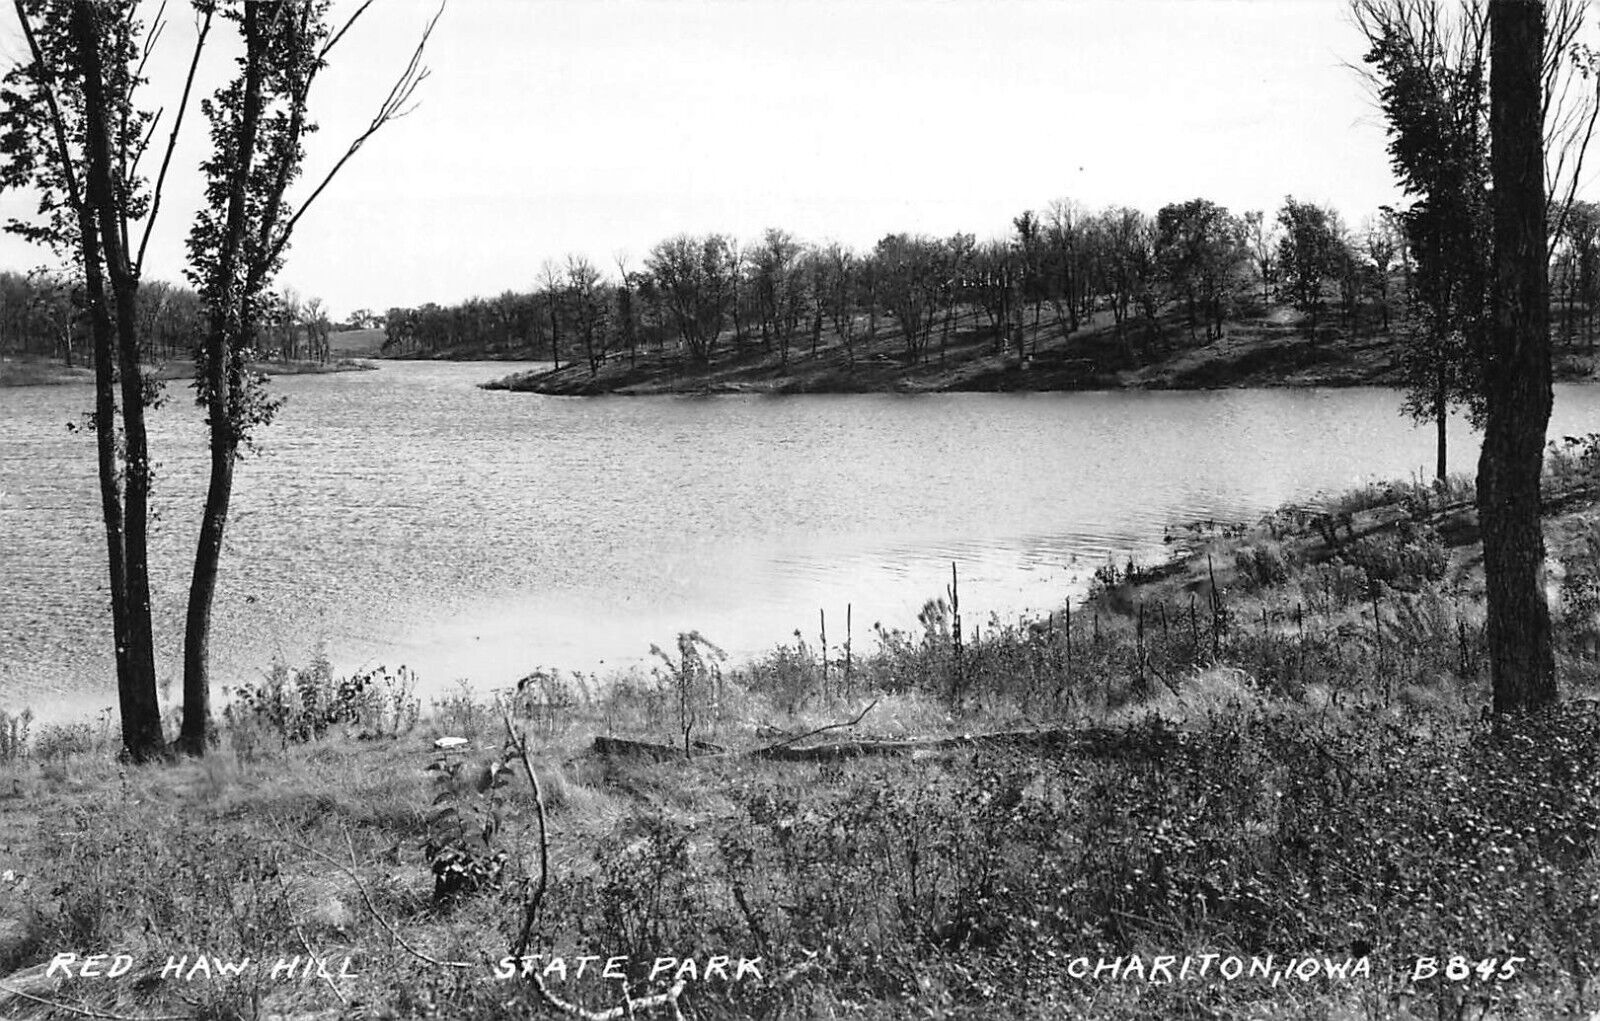 Red Haw Hill State Park Chariton Iowa RPPC Lake Photo Postcard